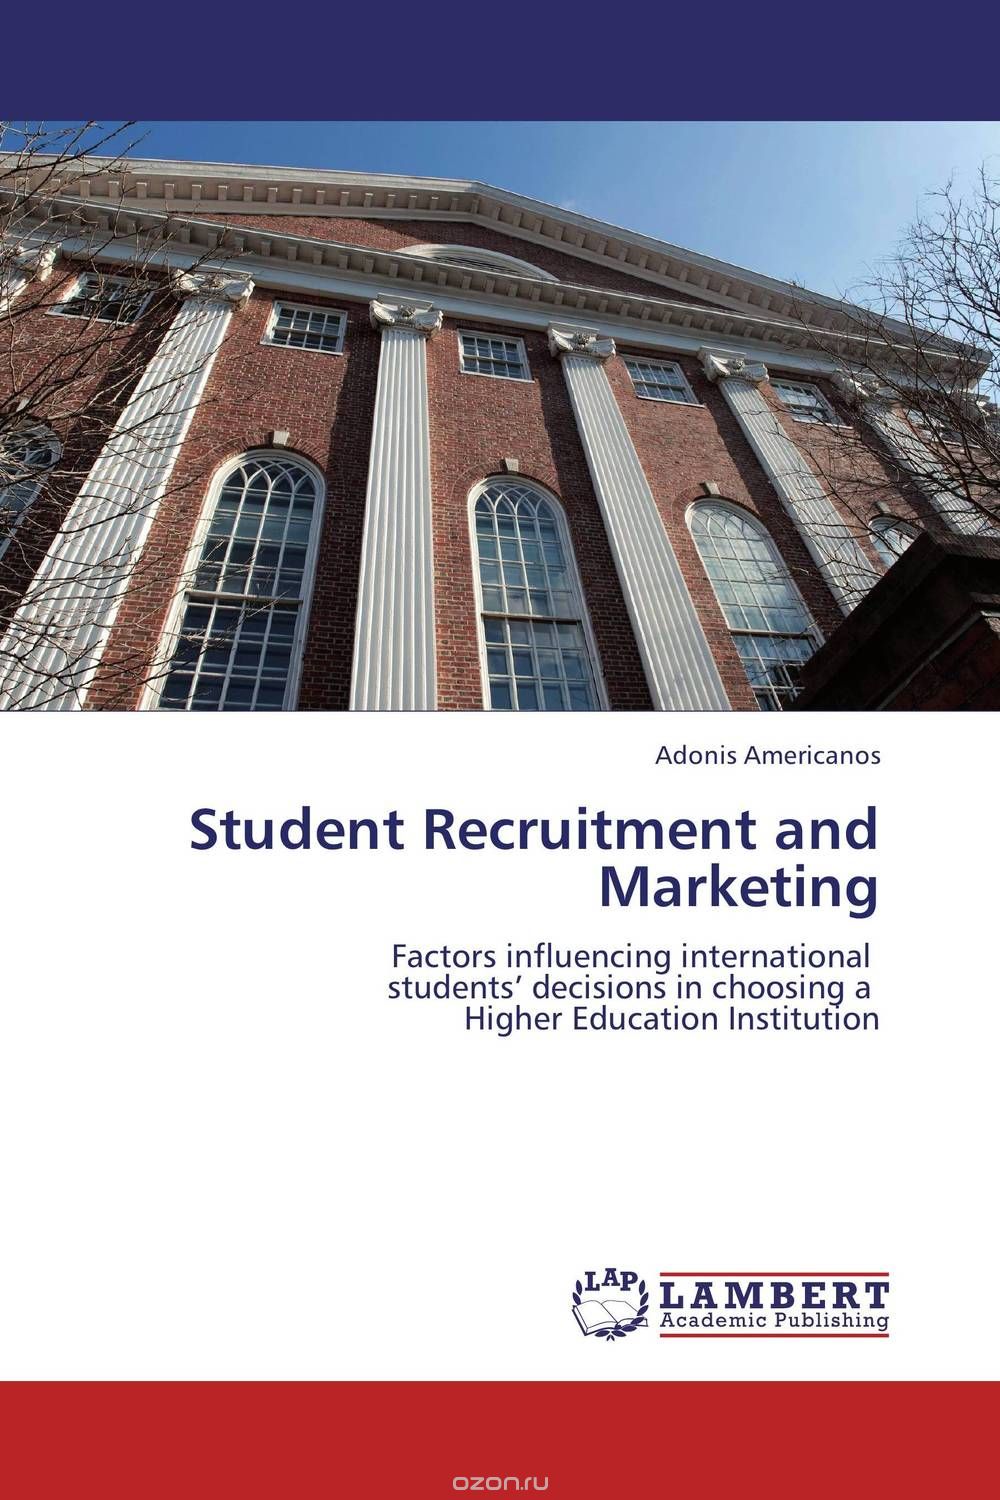 Скачать книгу "Student Recruitment and Marketing"